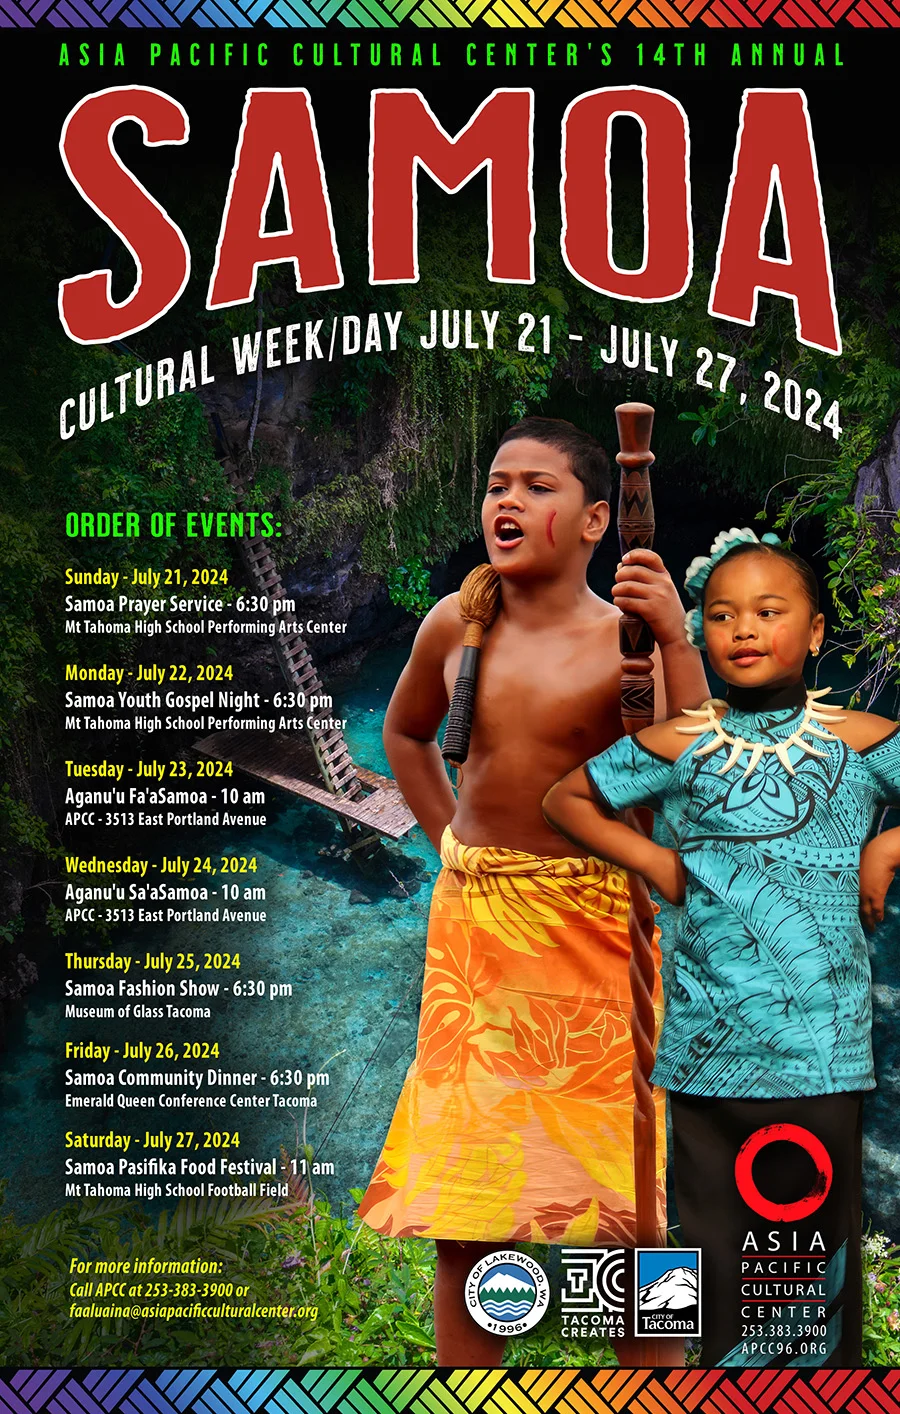 Advertisement for Samoa Cultural Week